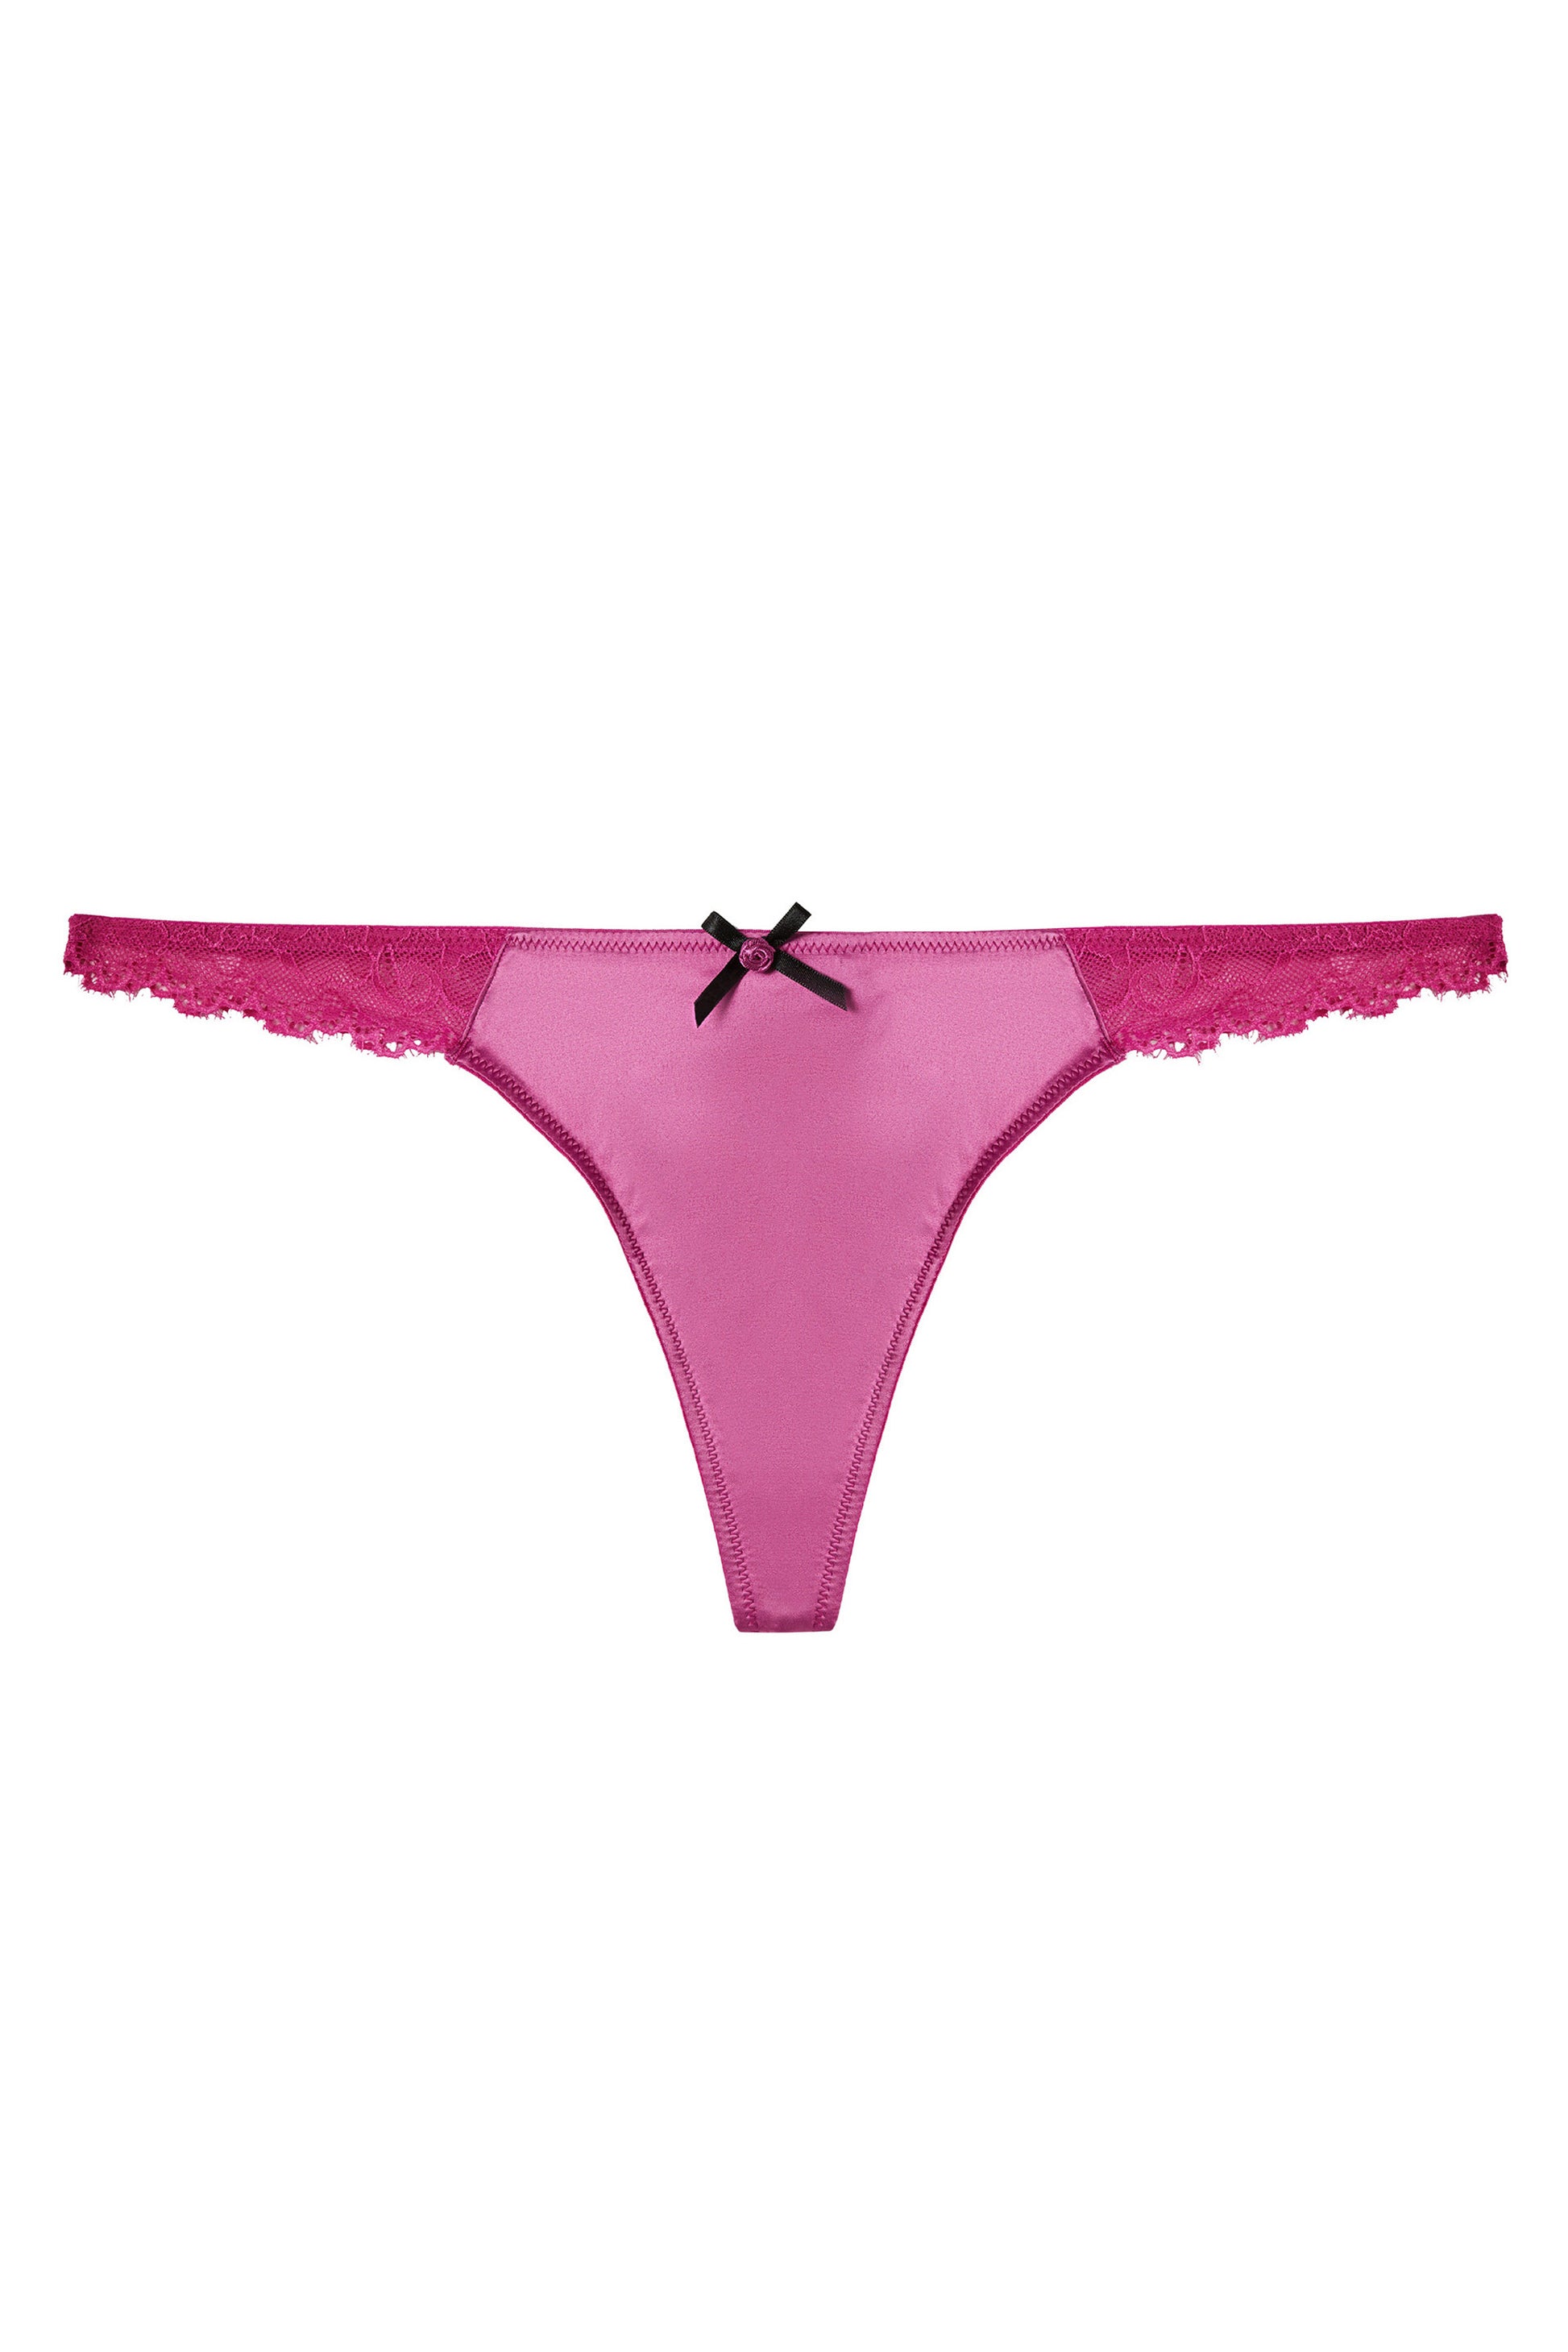 Victorias Secret PINK Thong Panties Size Medium Green/Black Plaid